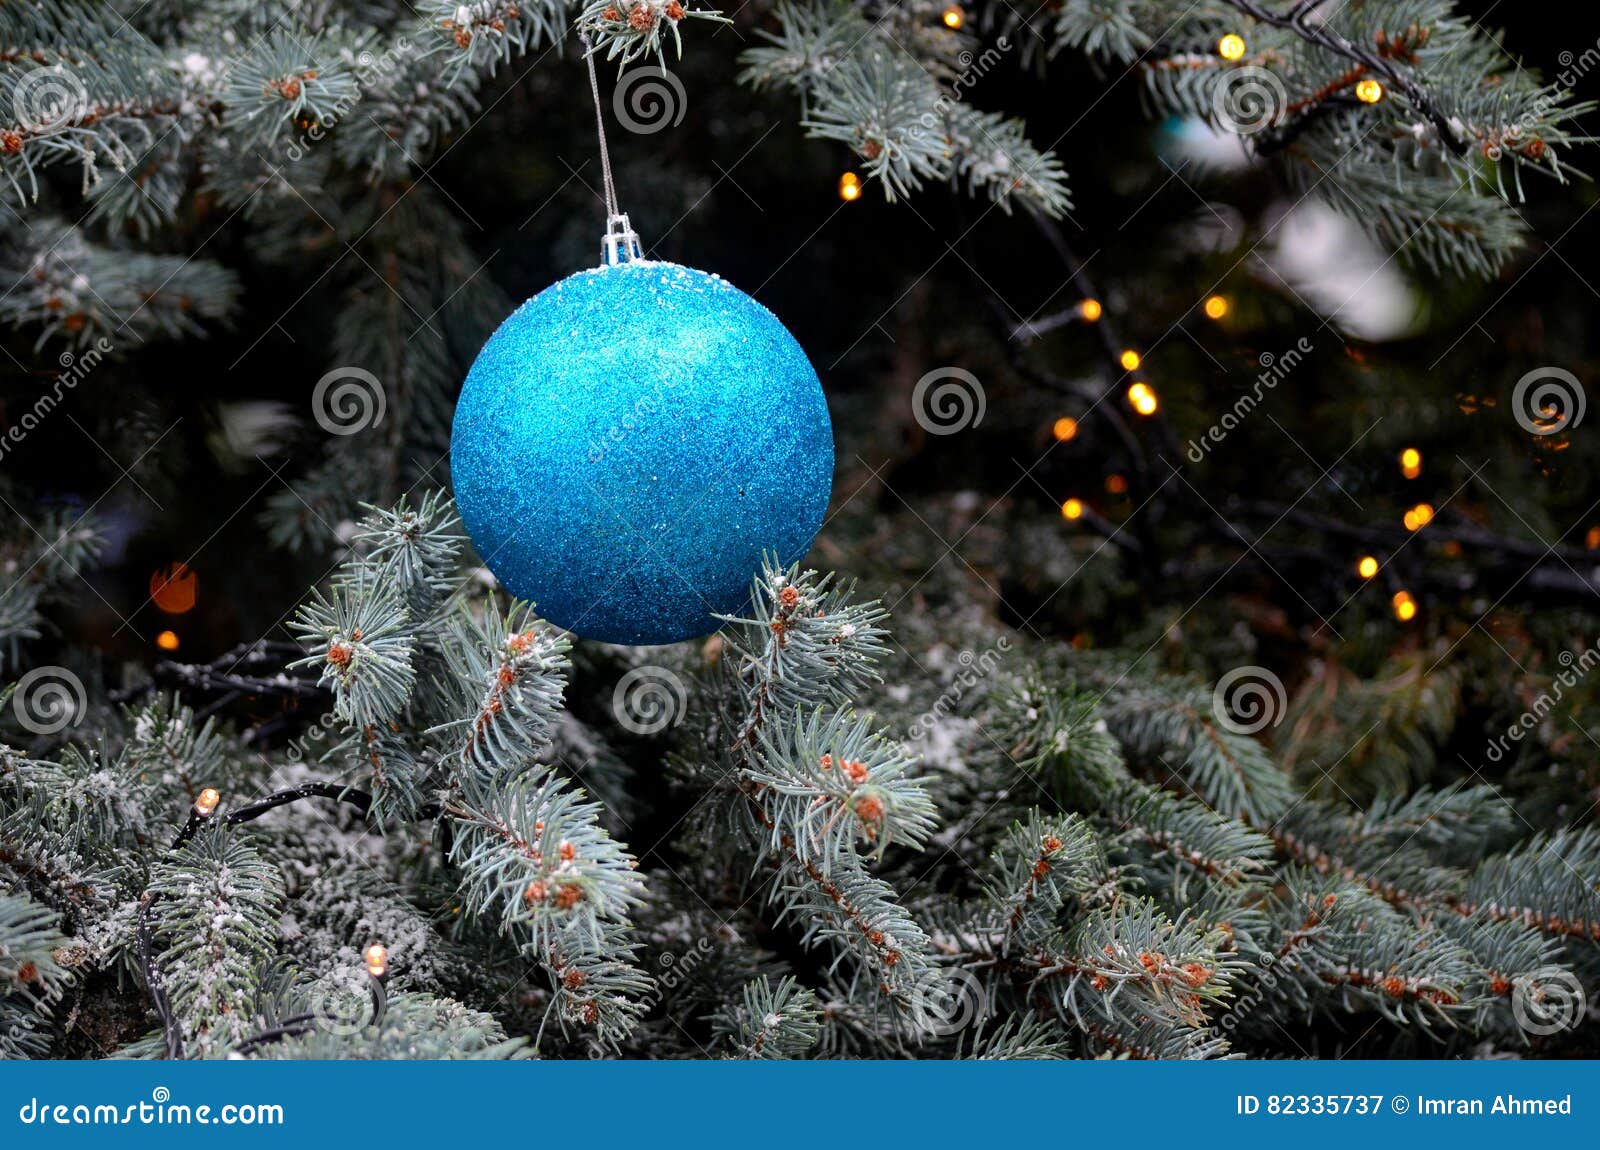 Glittering Blue Hanging Ball Decoration on Christmas Tree Stock Image ...